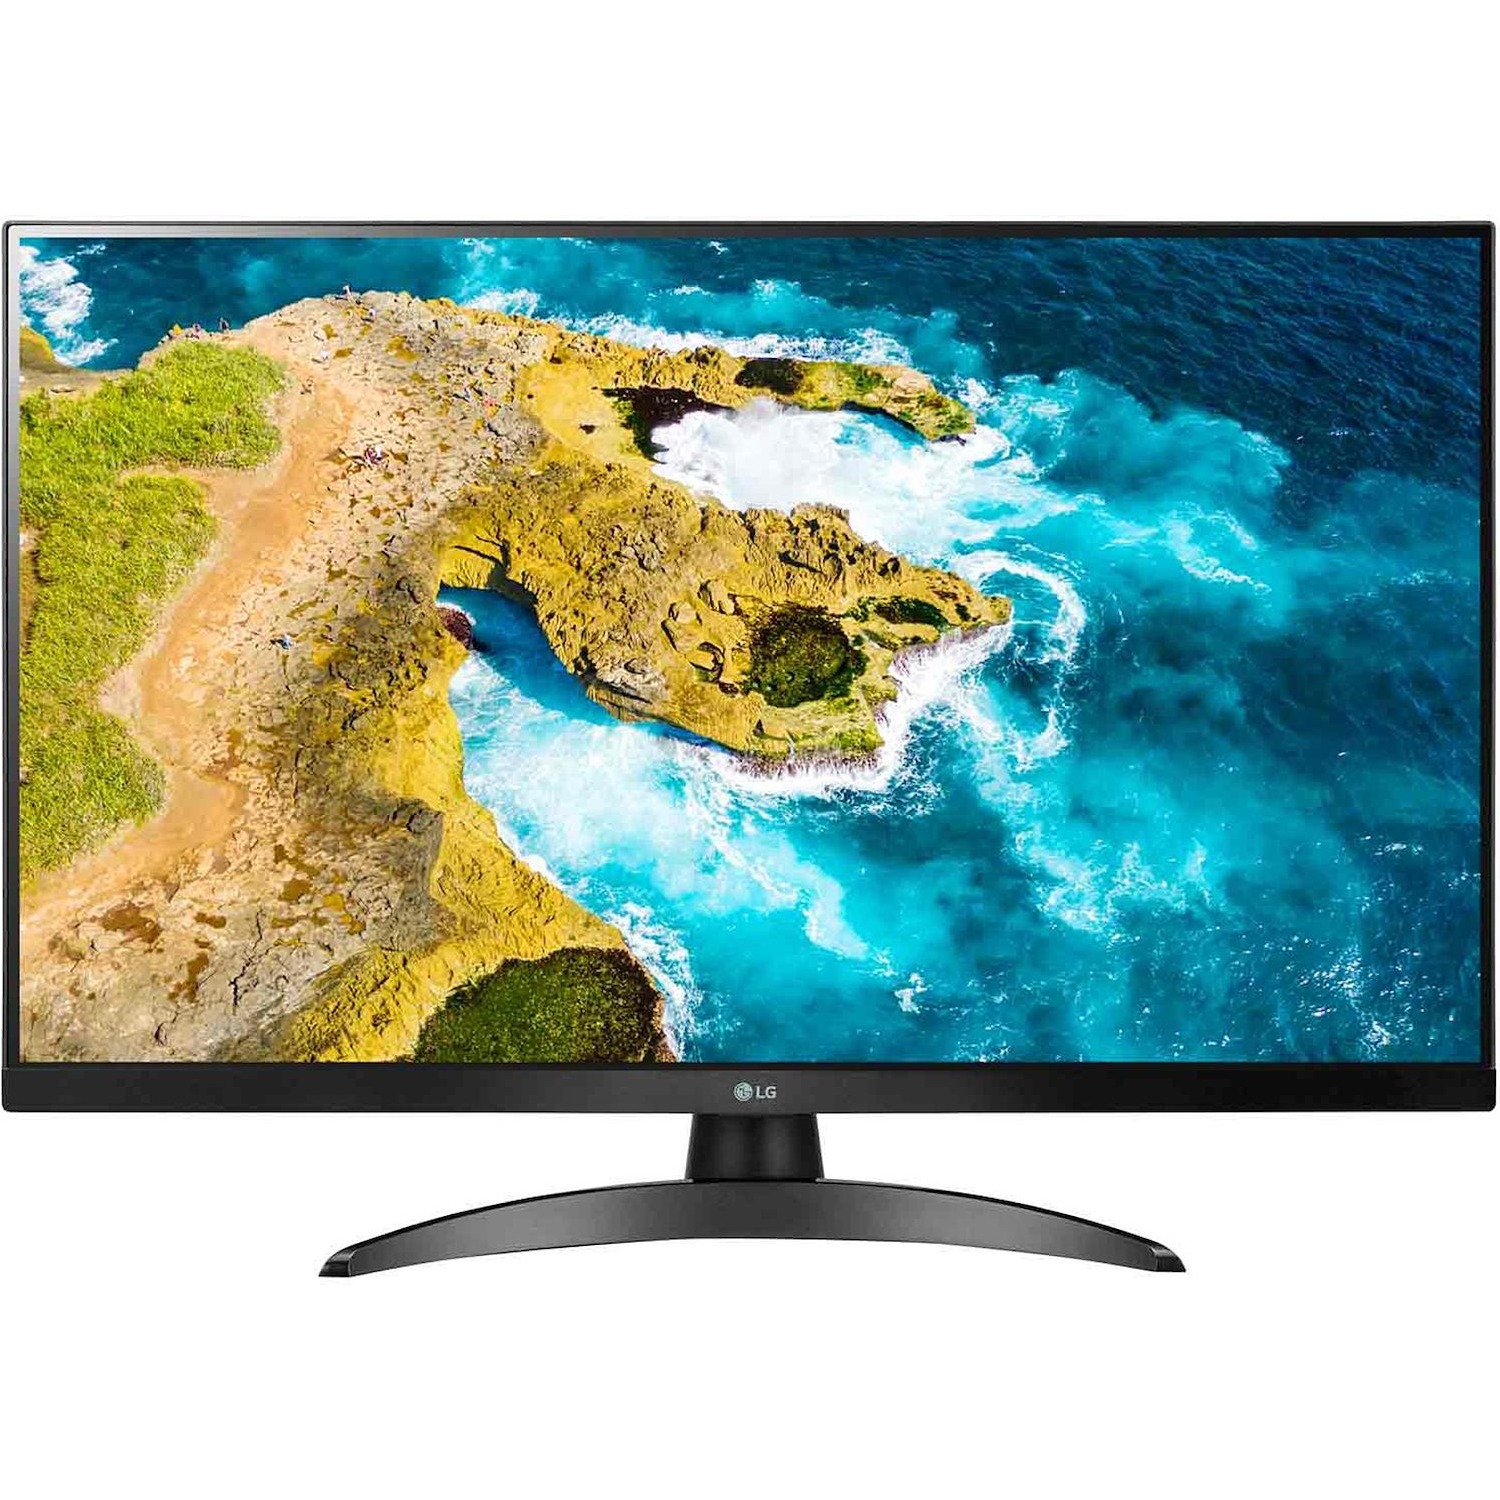 Immagine per TV LED Monitor Smart LG 27TQ615S-PZ nero da DIMOStore